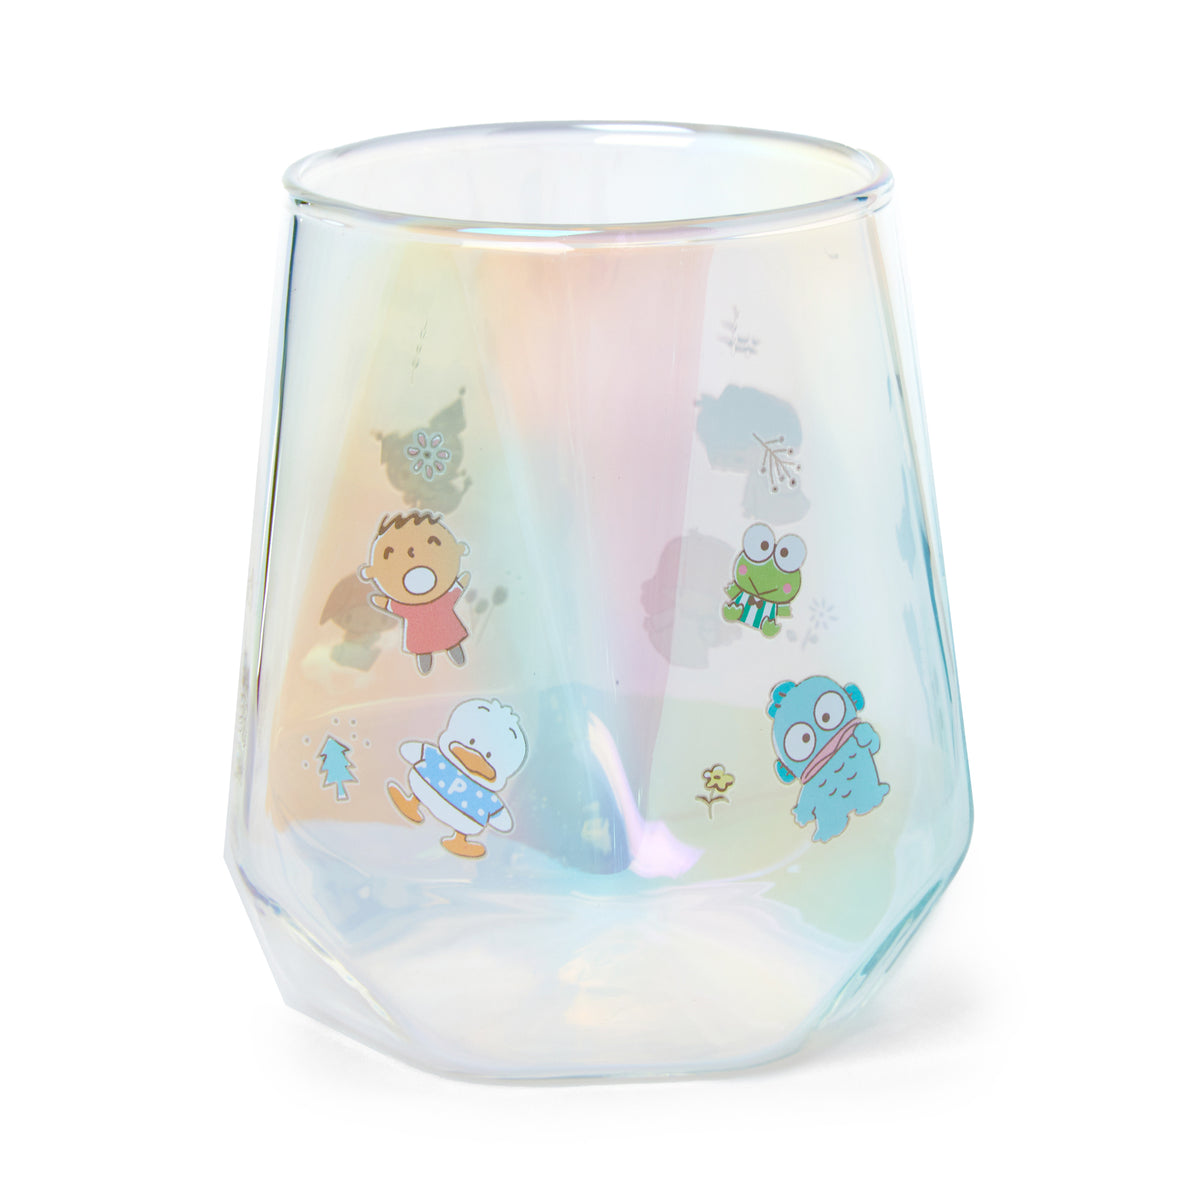 Sanrio Characters Iridescent Glass Home Goods Global Original   